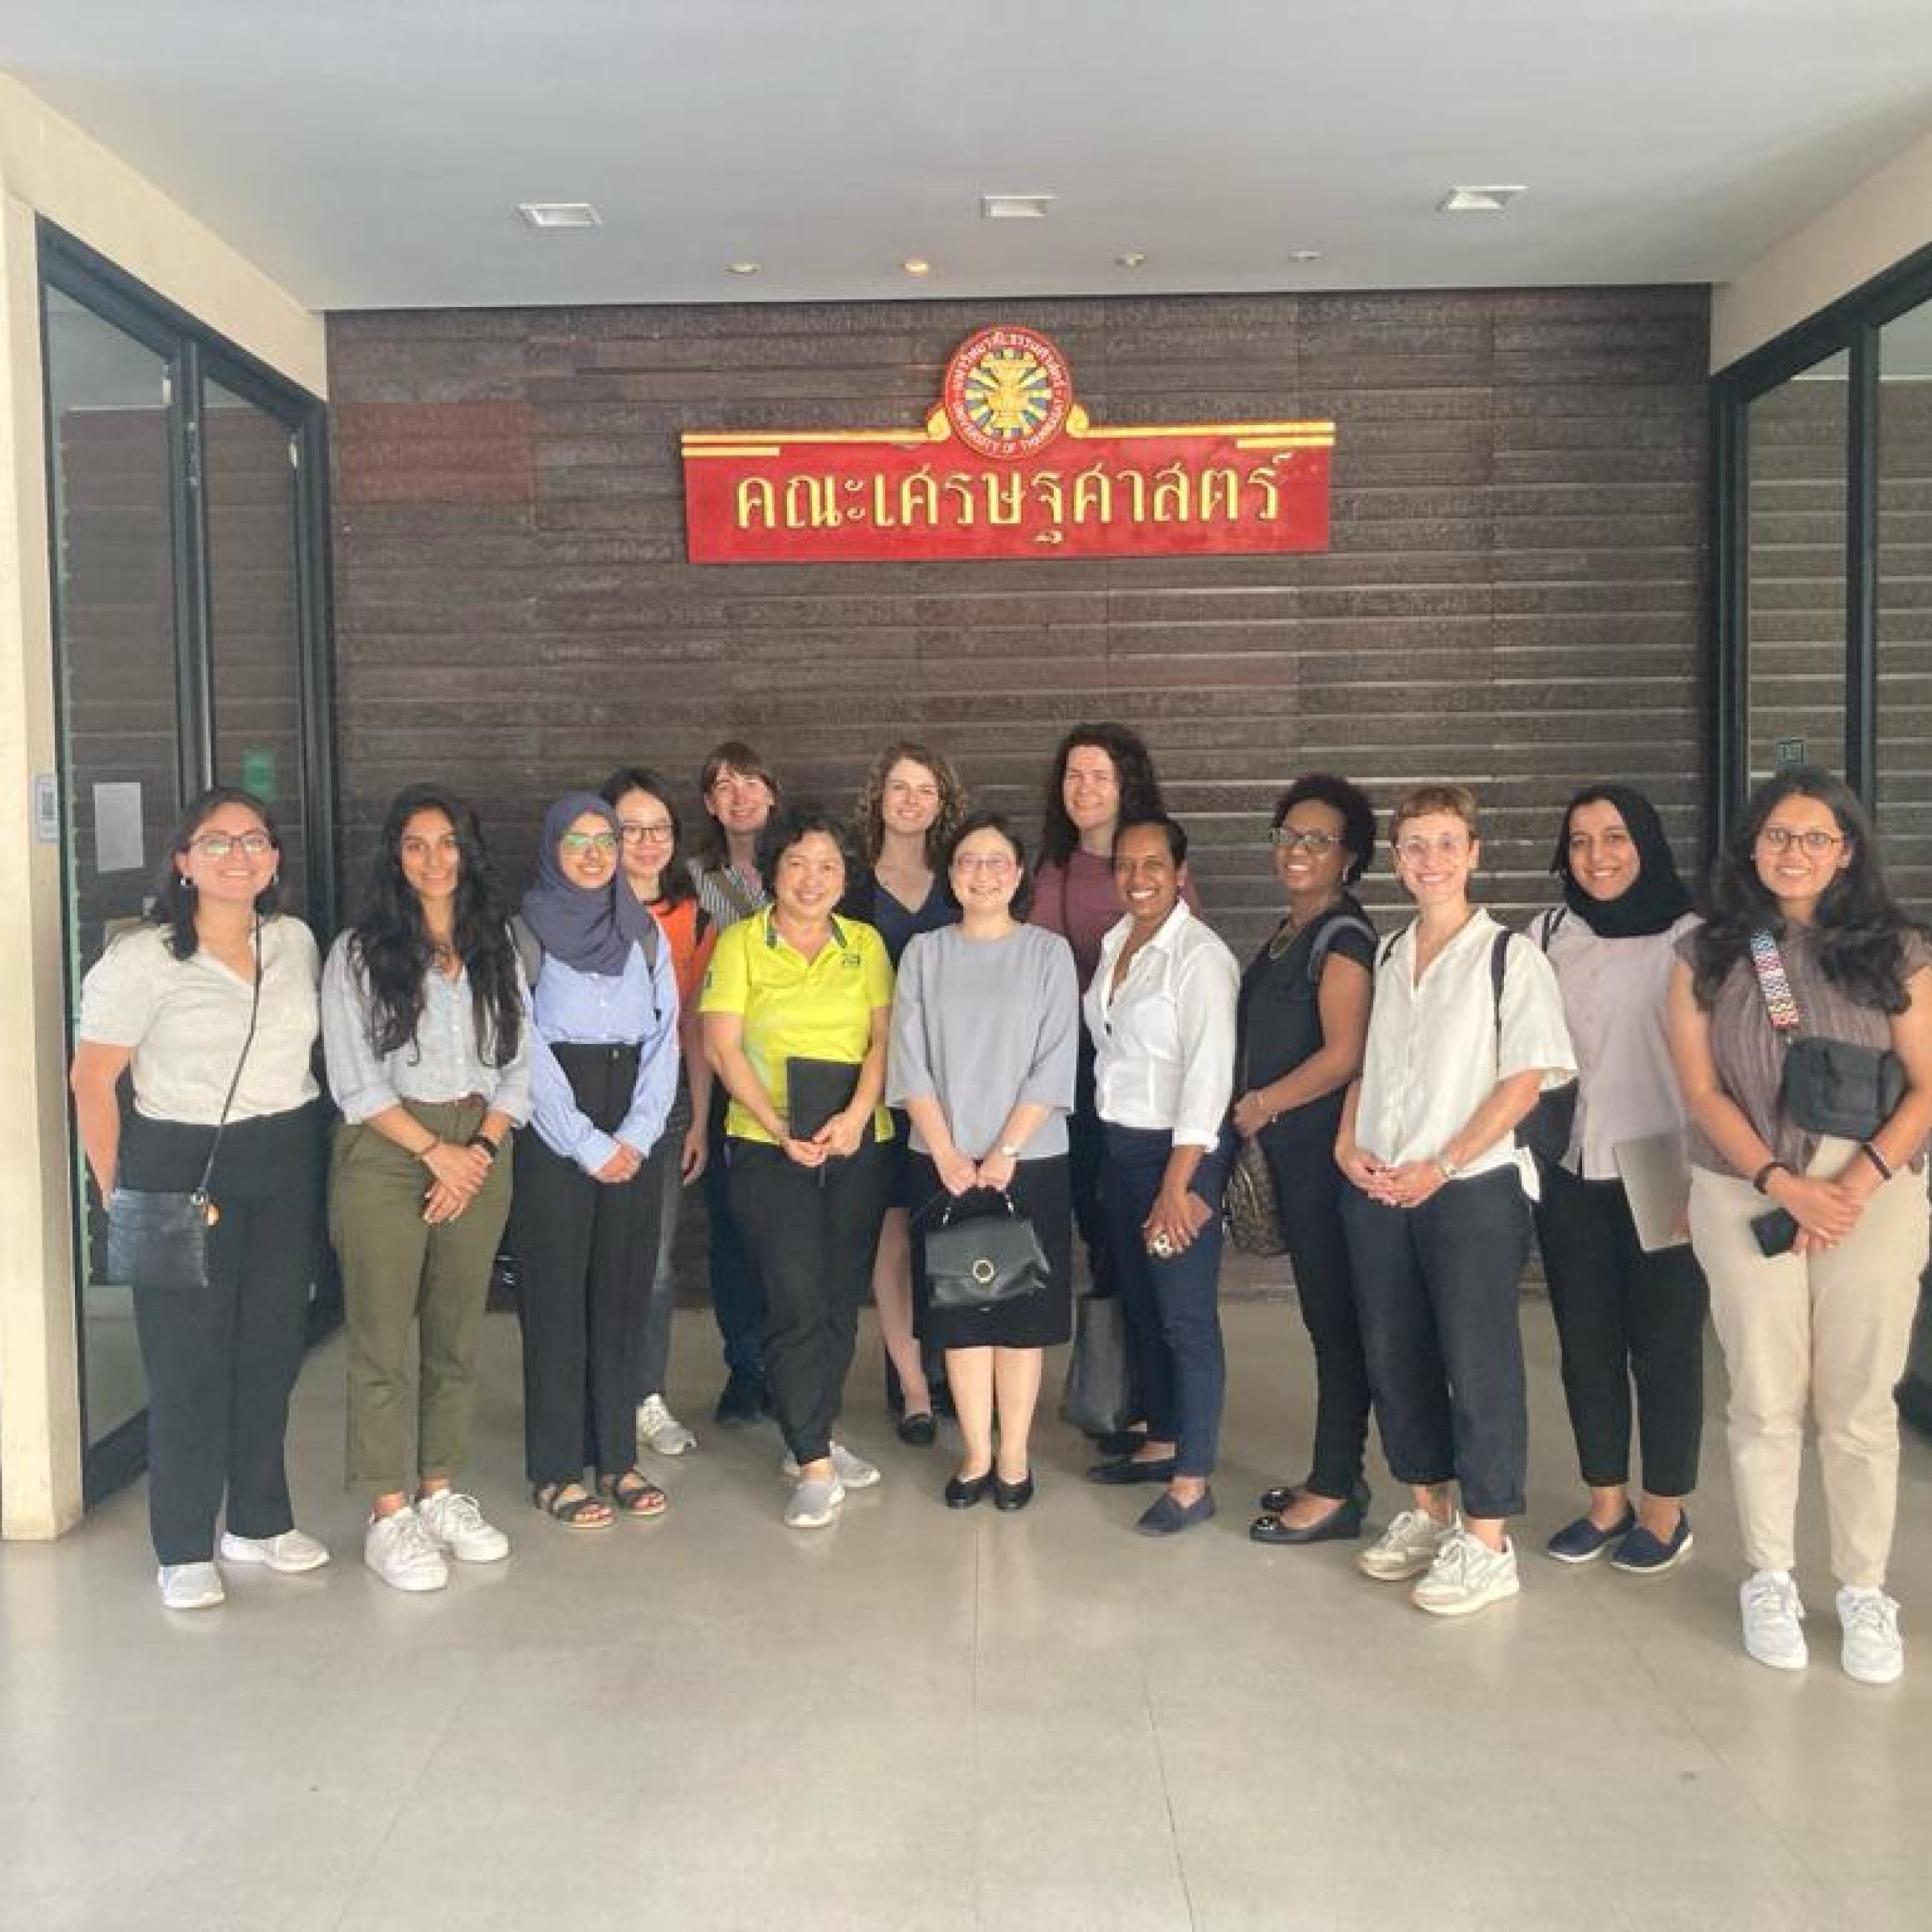 SPIA graduate students in Thailand over winter break